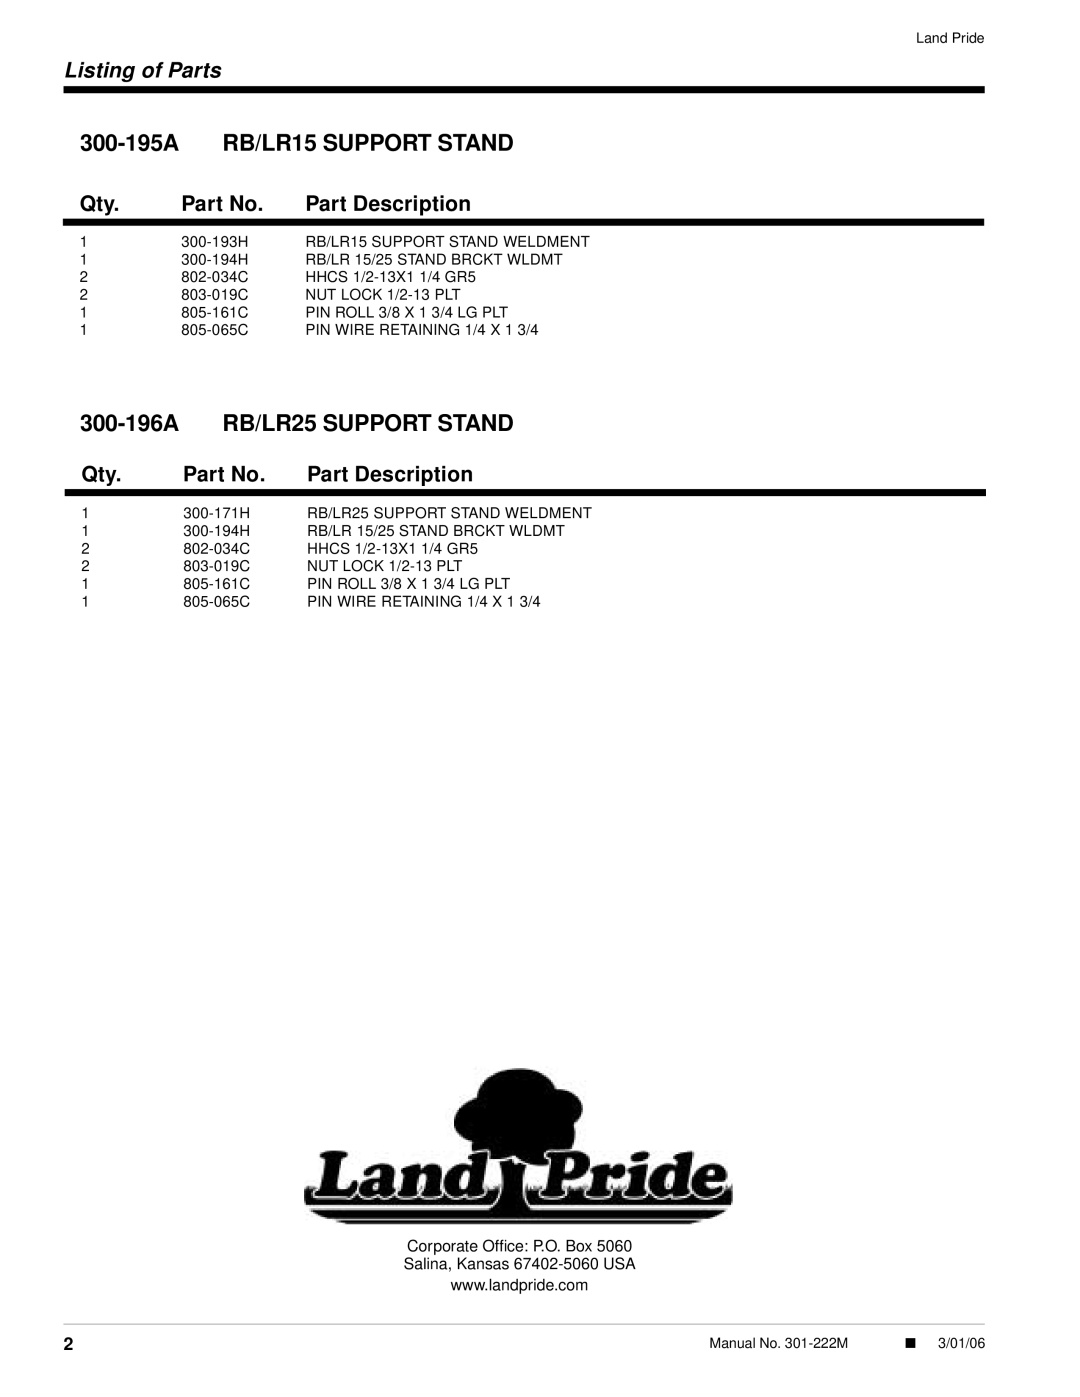 Land Pride 300-195ARB/LR15 SUPPORT STAND, 300-196ARB/LR25 SUPPORT STAND, Listing of Parts, Part Description 